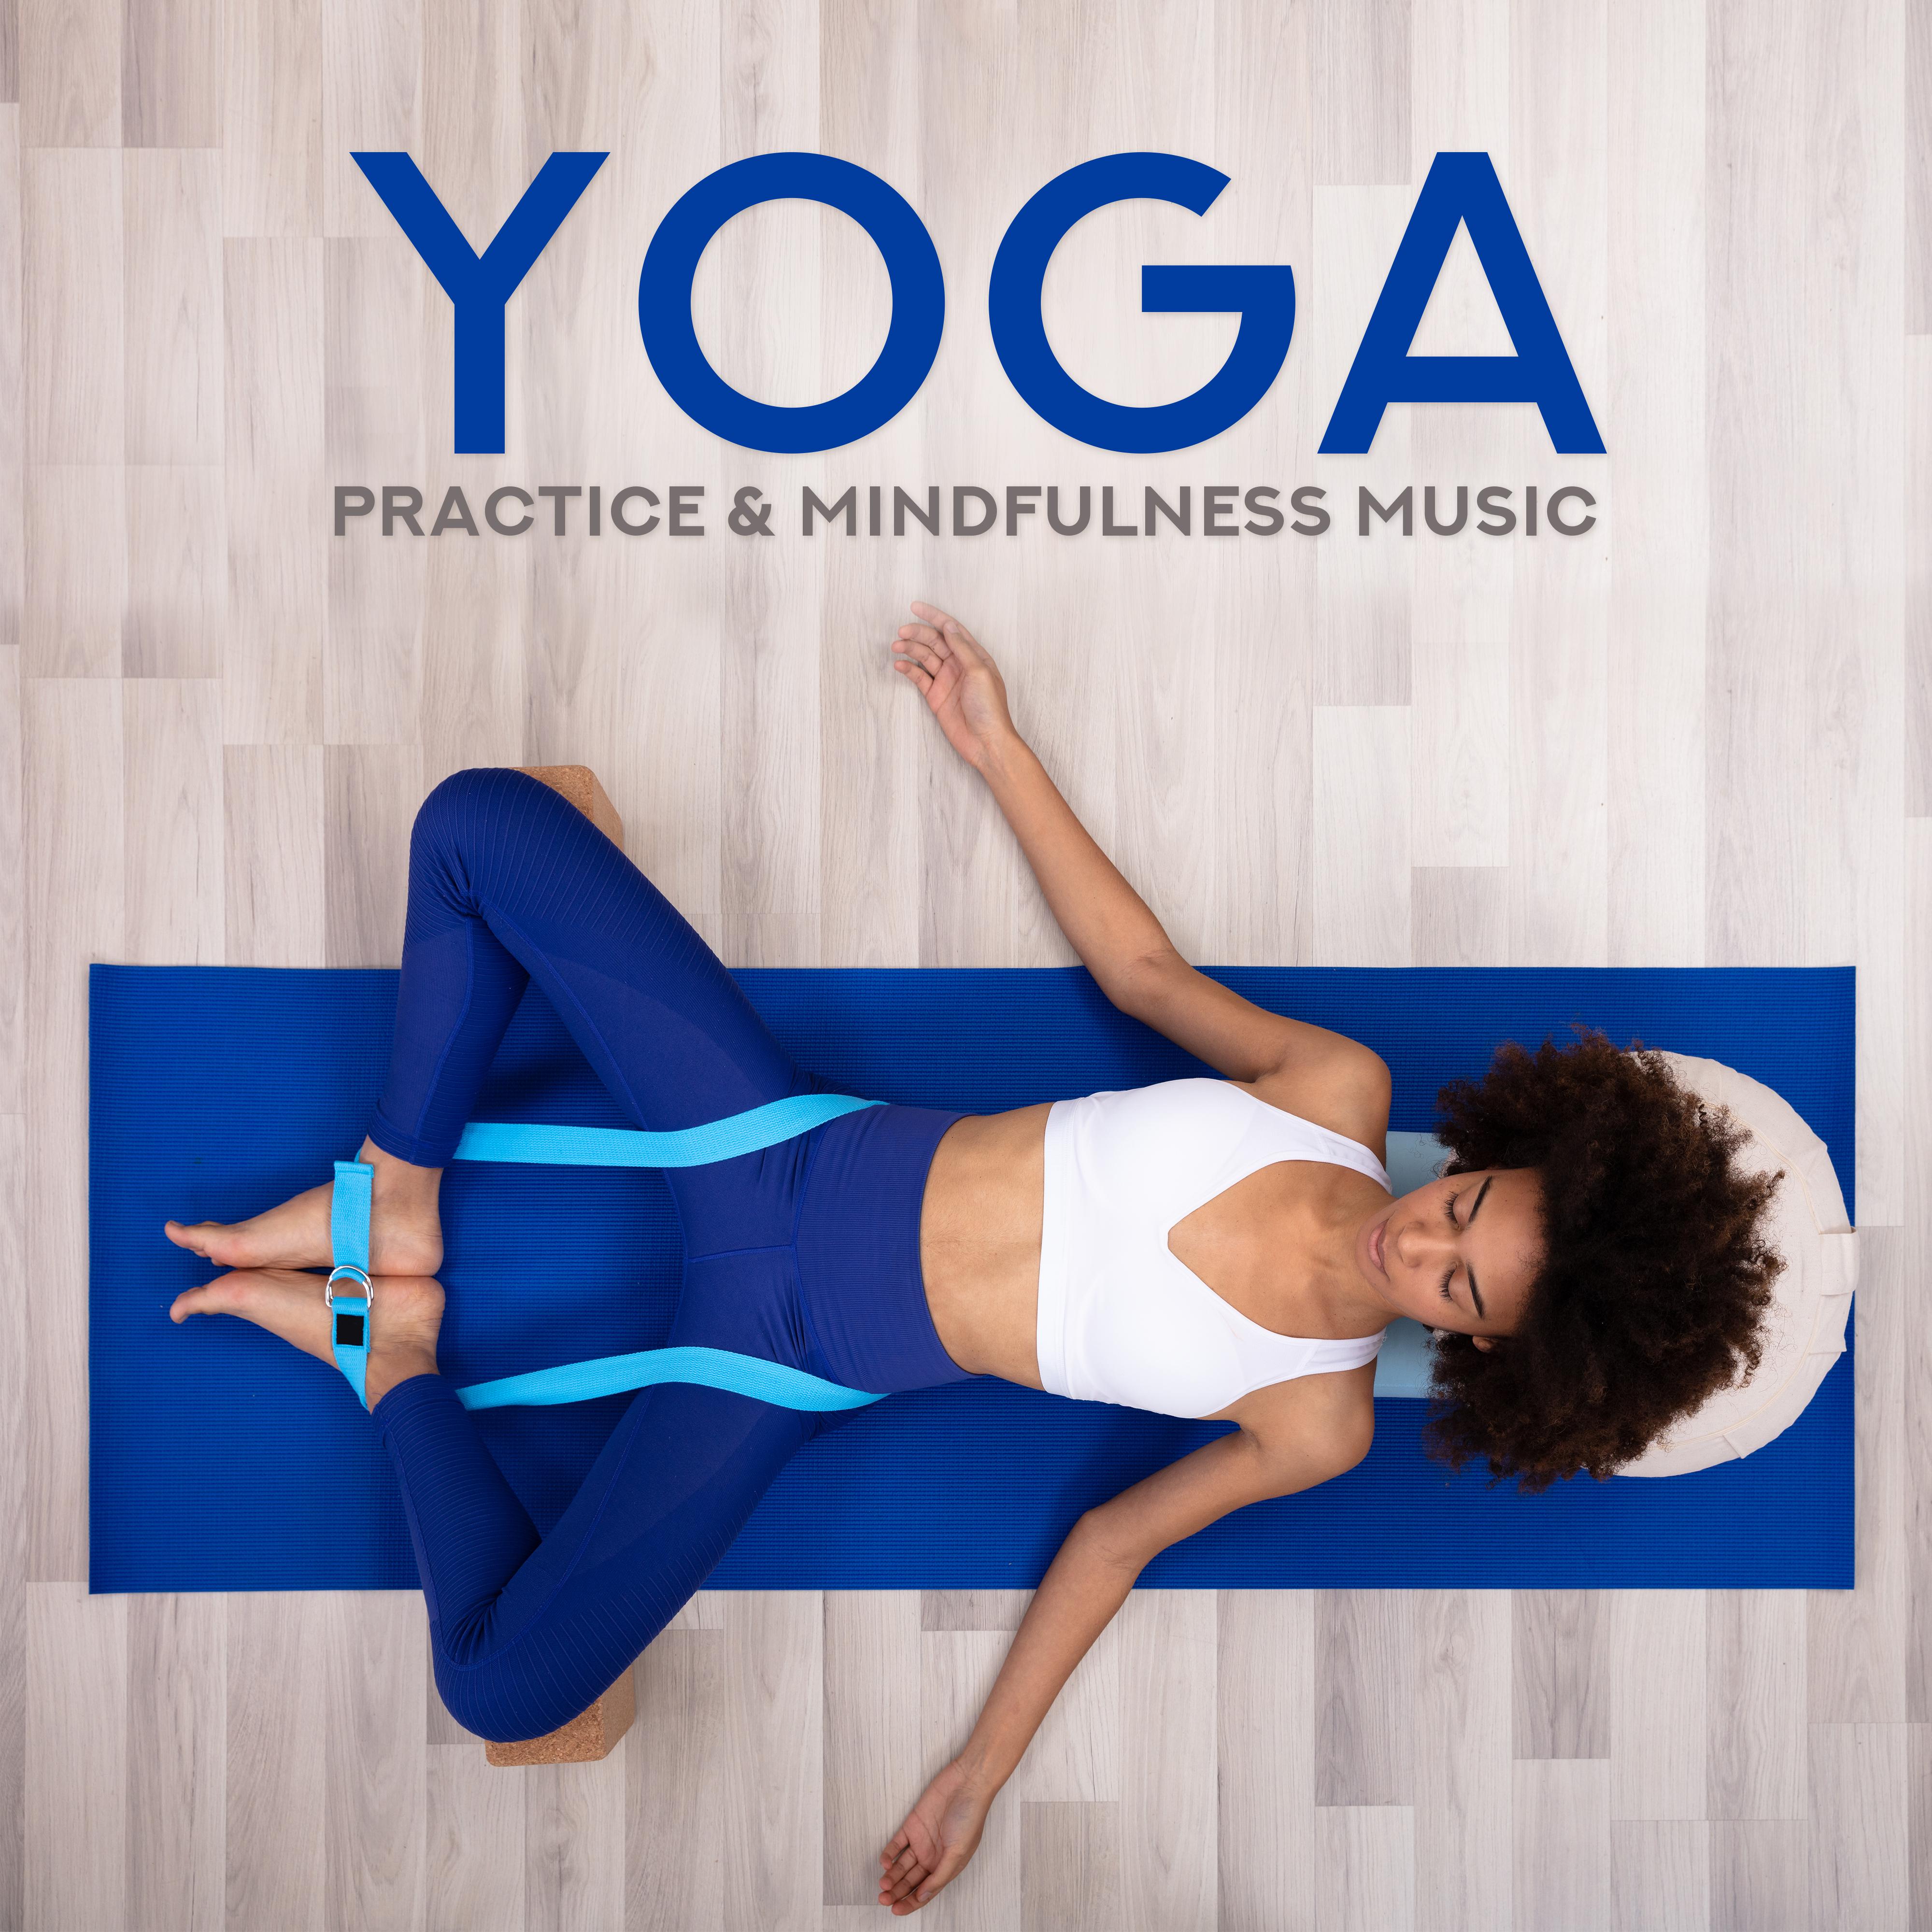 Yoga Practice & Mindfulness Music – Healing Music for Deep Meditation, Inner Balance, Yoga Training, Mindfulness Relaxation, Zen Lounge, Yoga Meditation